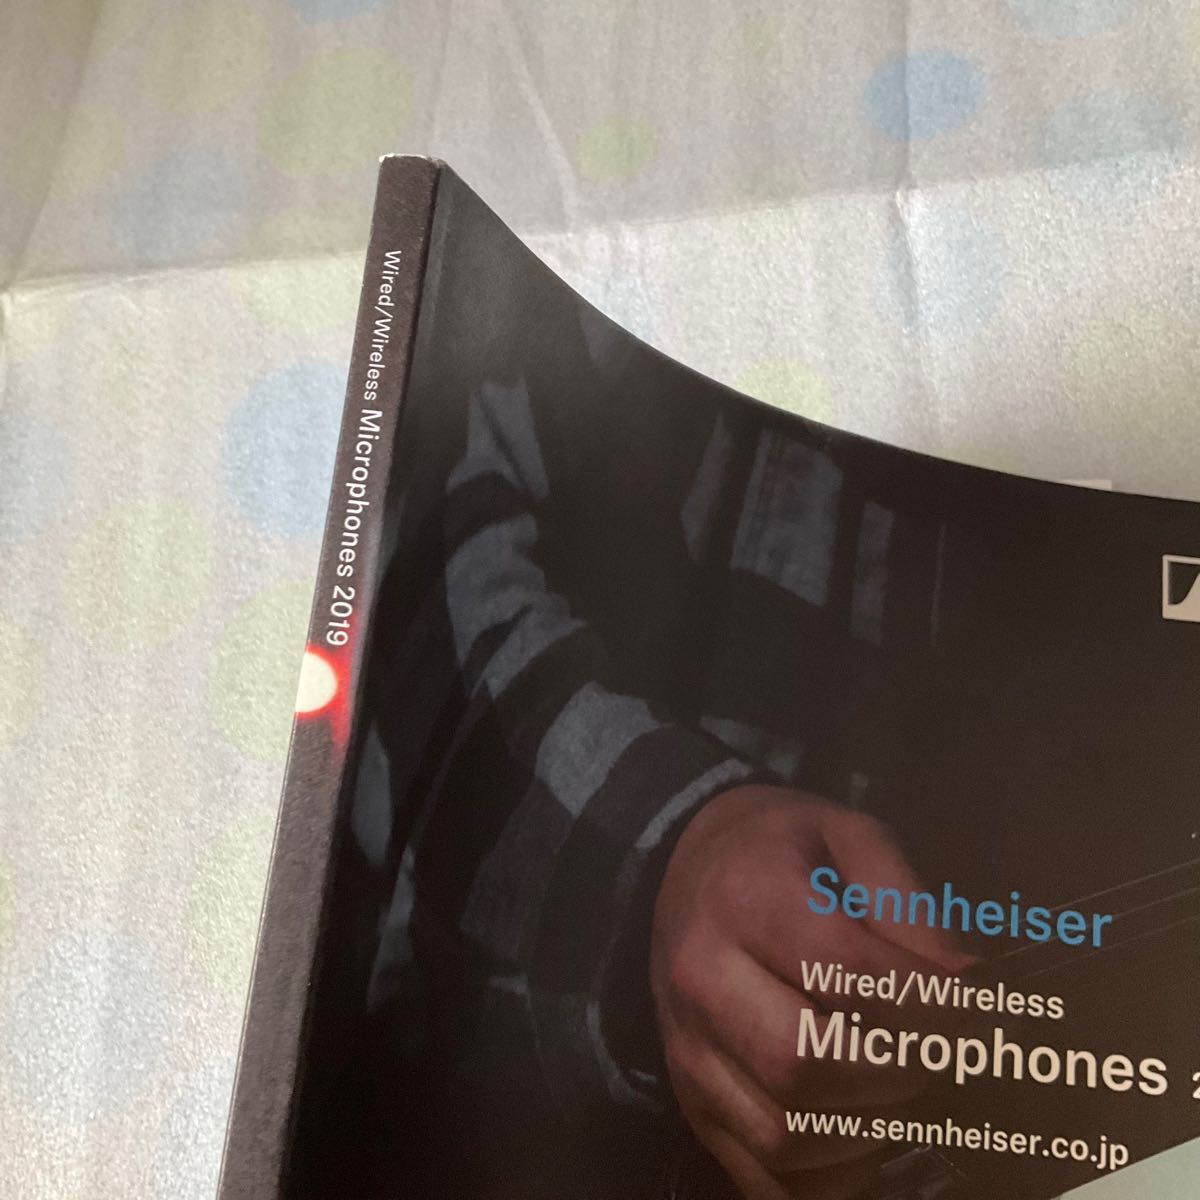 SENNHEISER Microphones 2019 総合カタログ